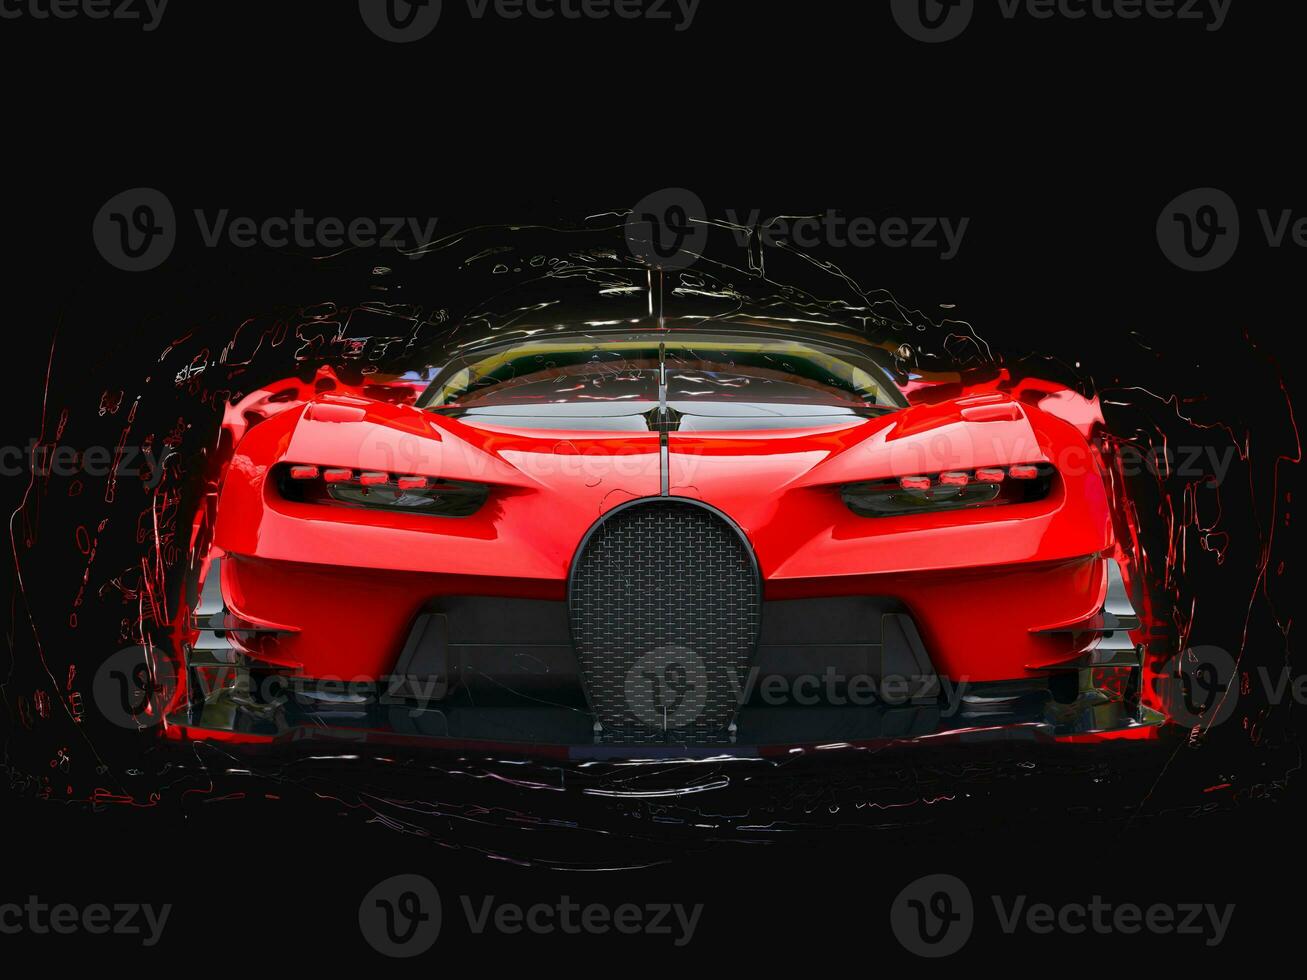 krachtig rood super ras auto - 3d illustratie foto